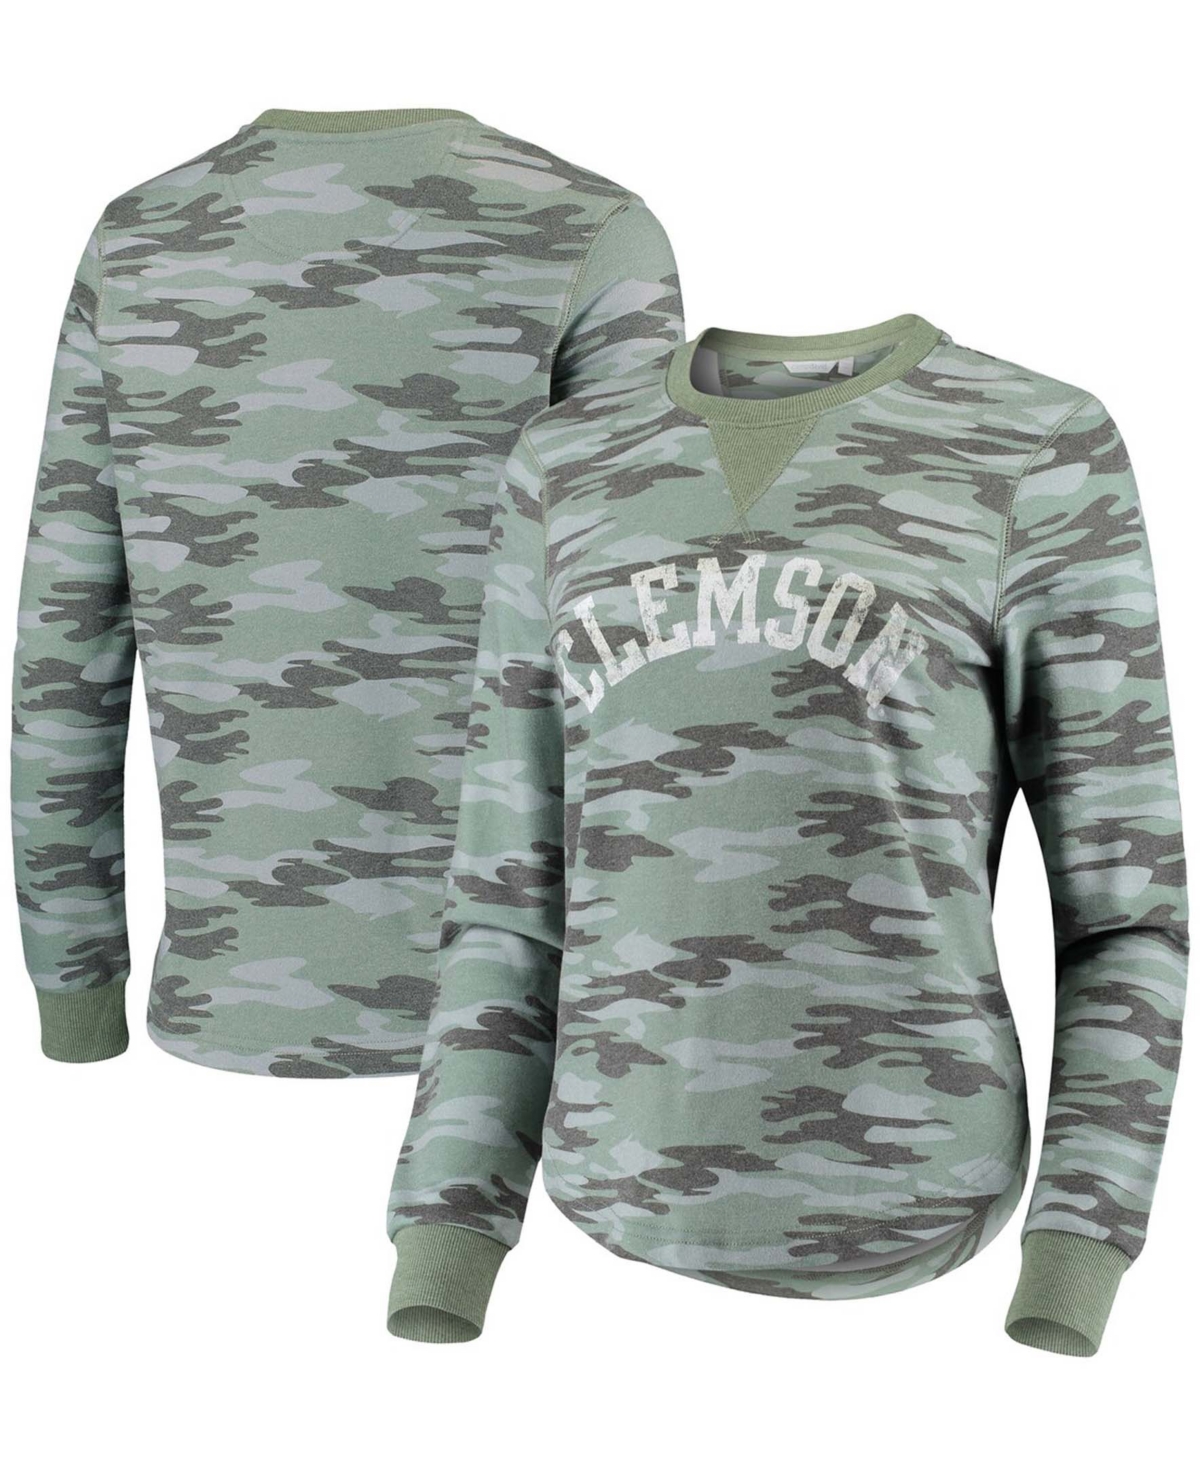 Women's Camo Clemson Tigers Comfy Pullover Sweatshirt - Camo